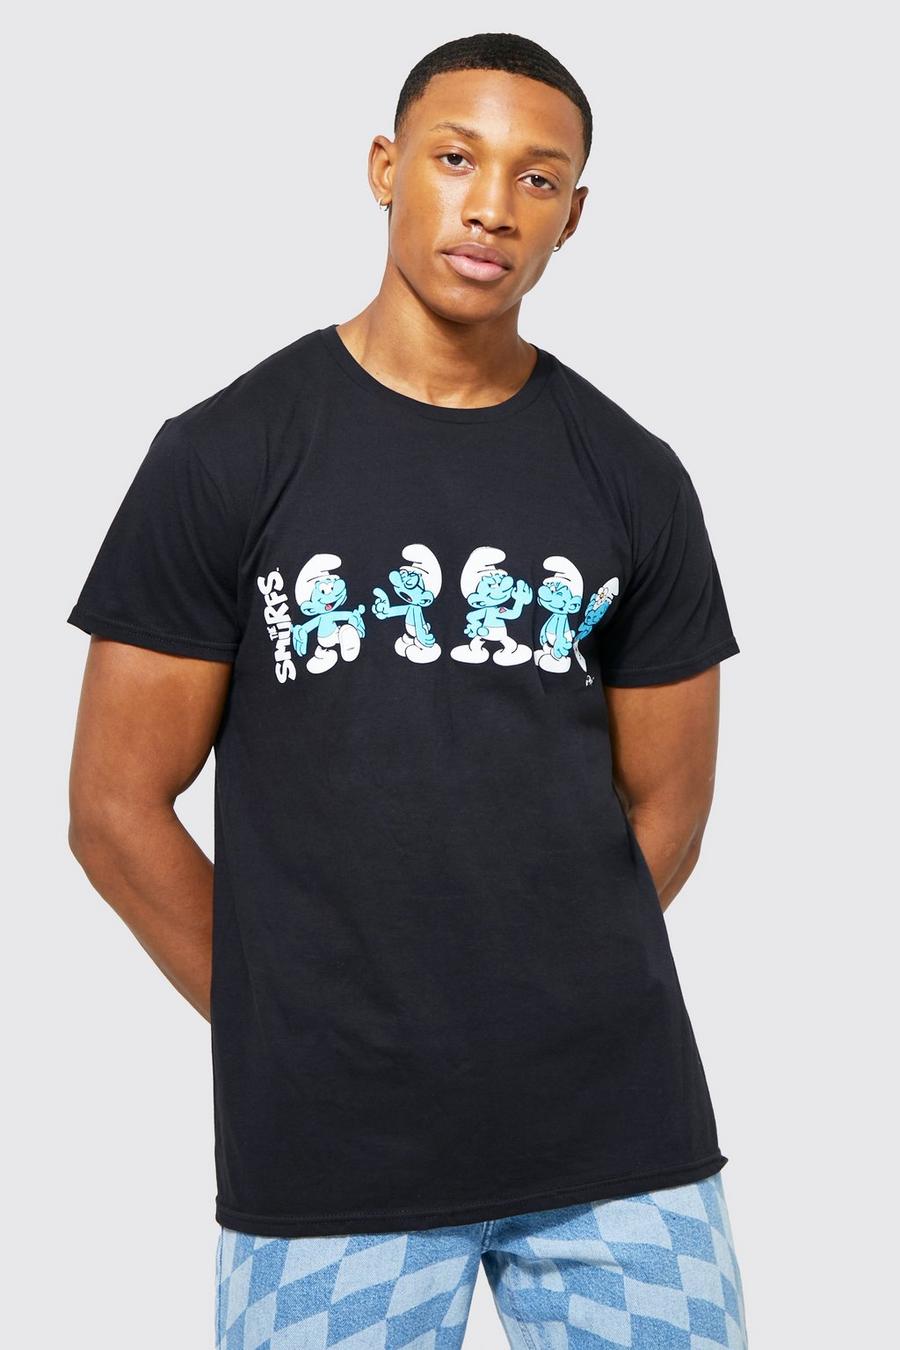 Black The Smurfs License T-shirt Global